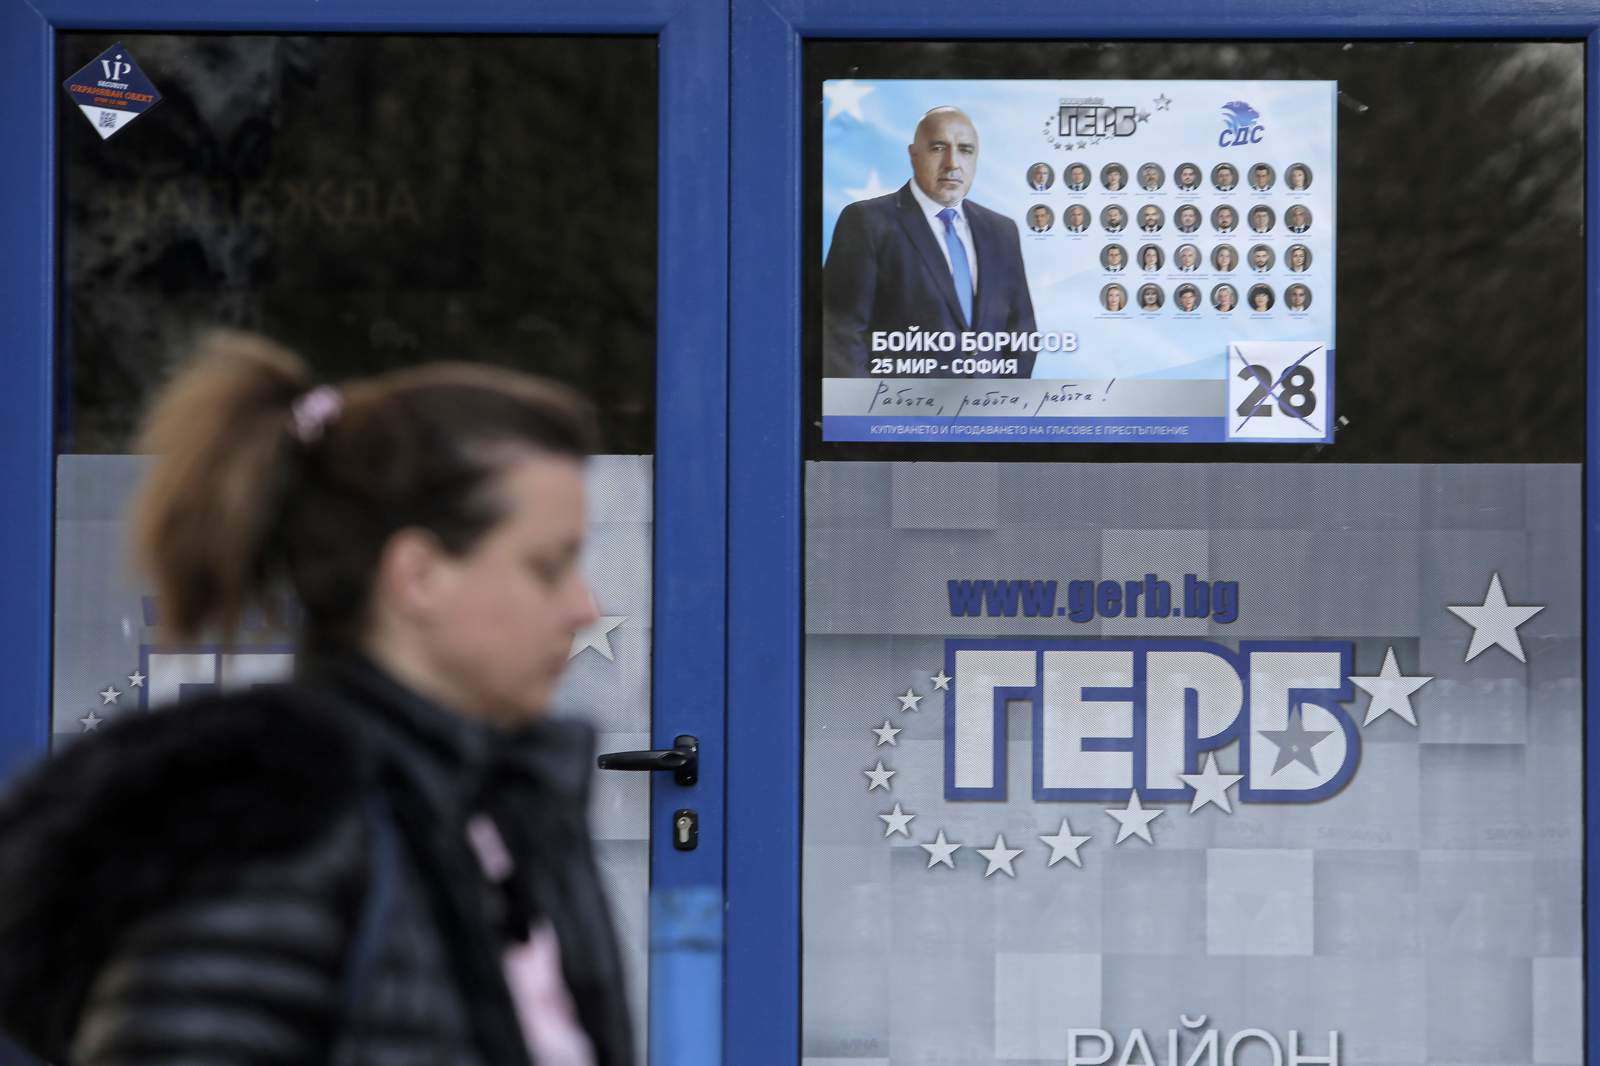 Virus pandemic overshadows Bulgarian parliamentary election